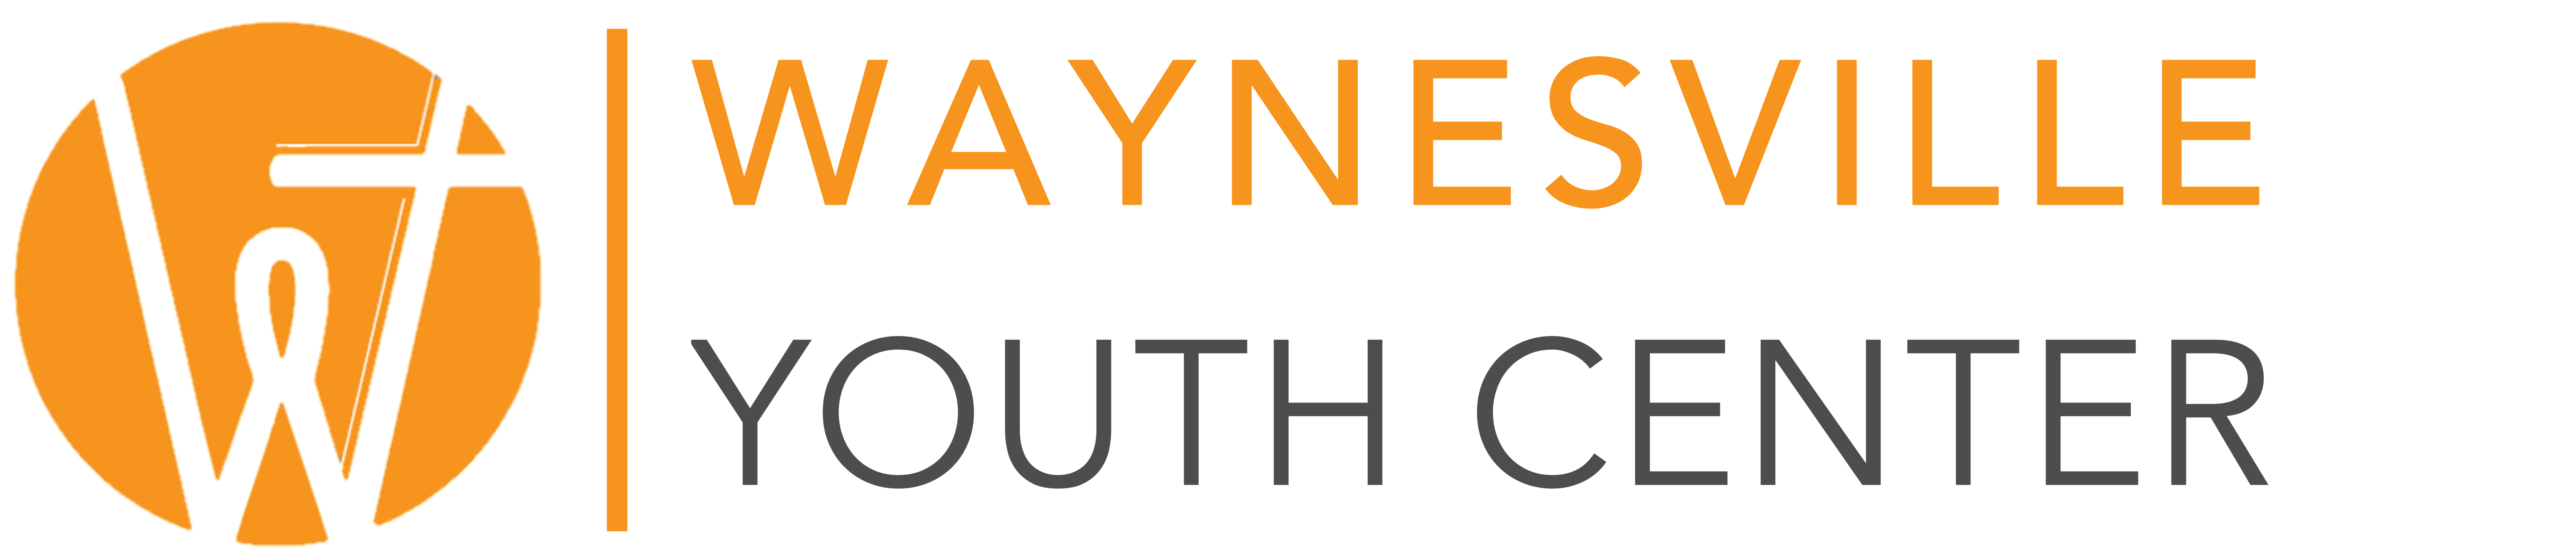 Waynesville Youth Center